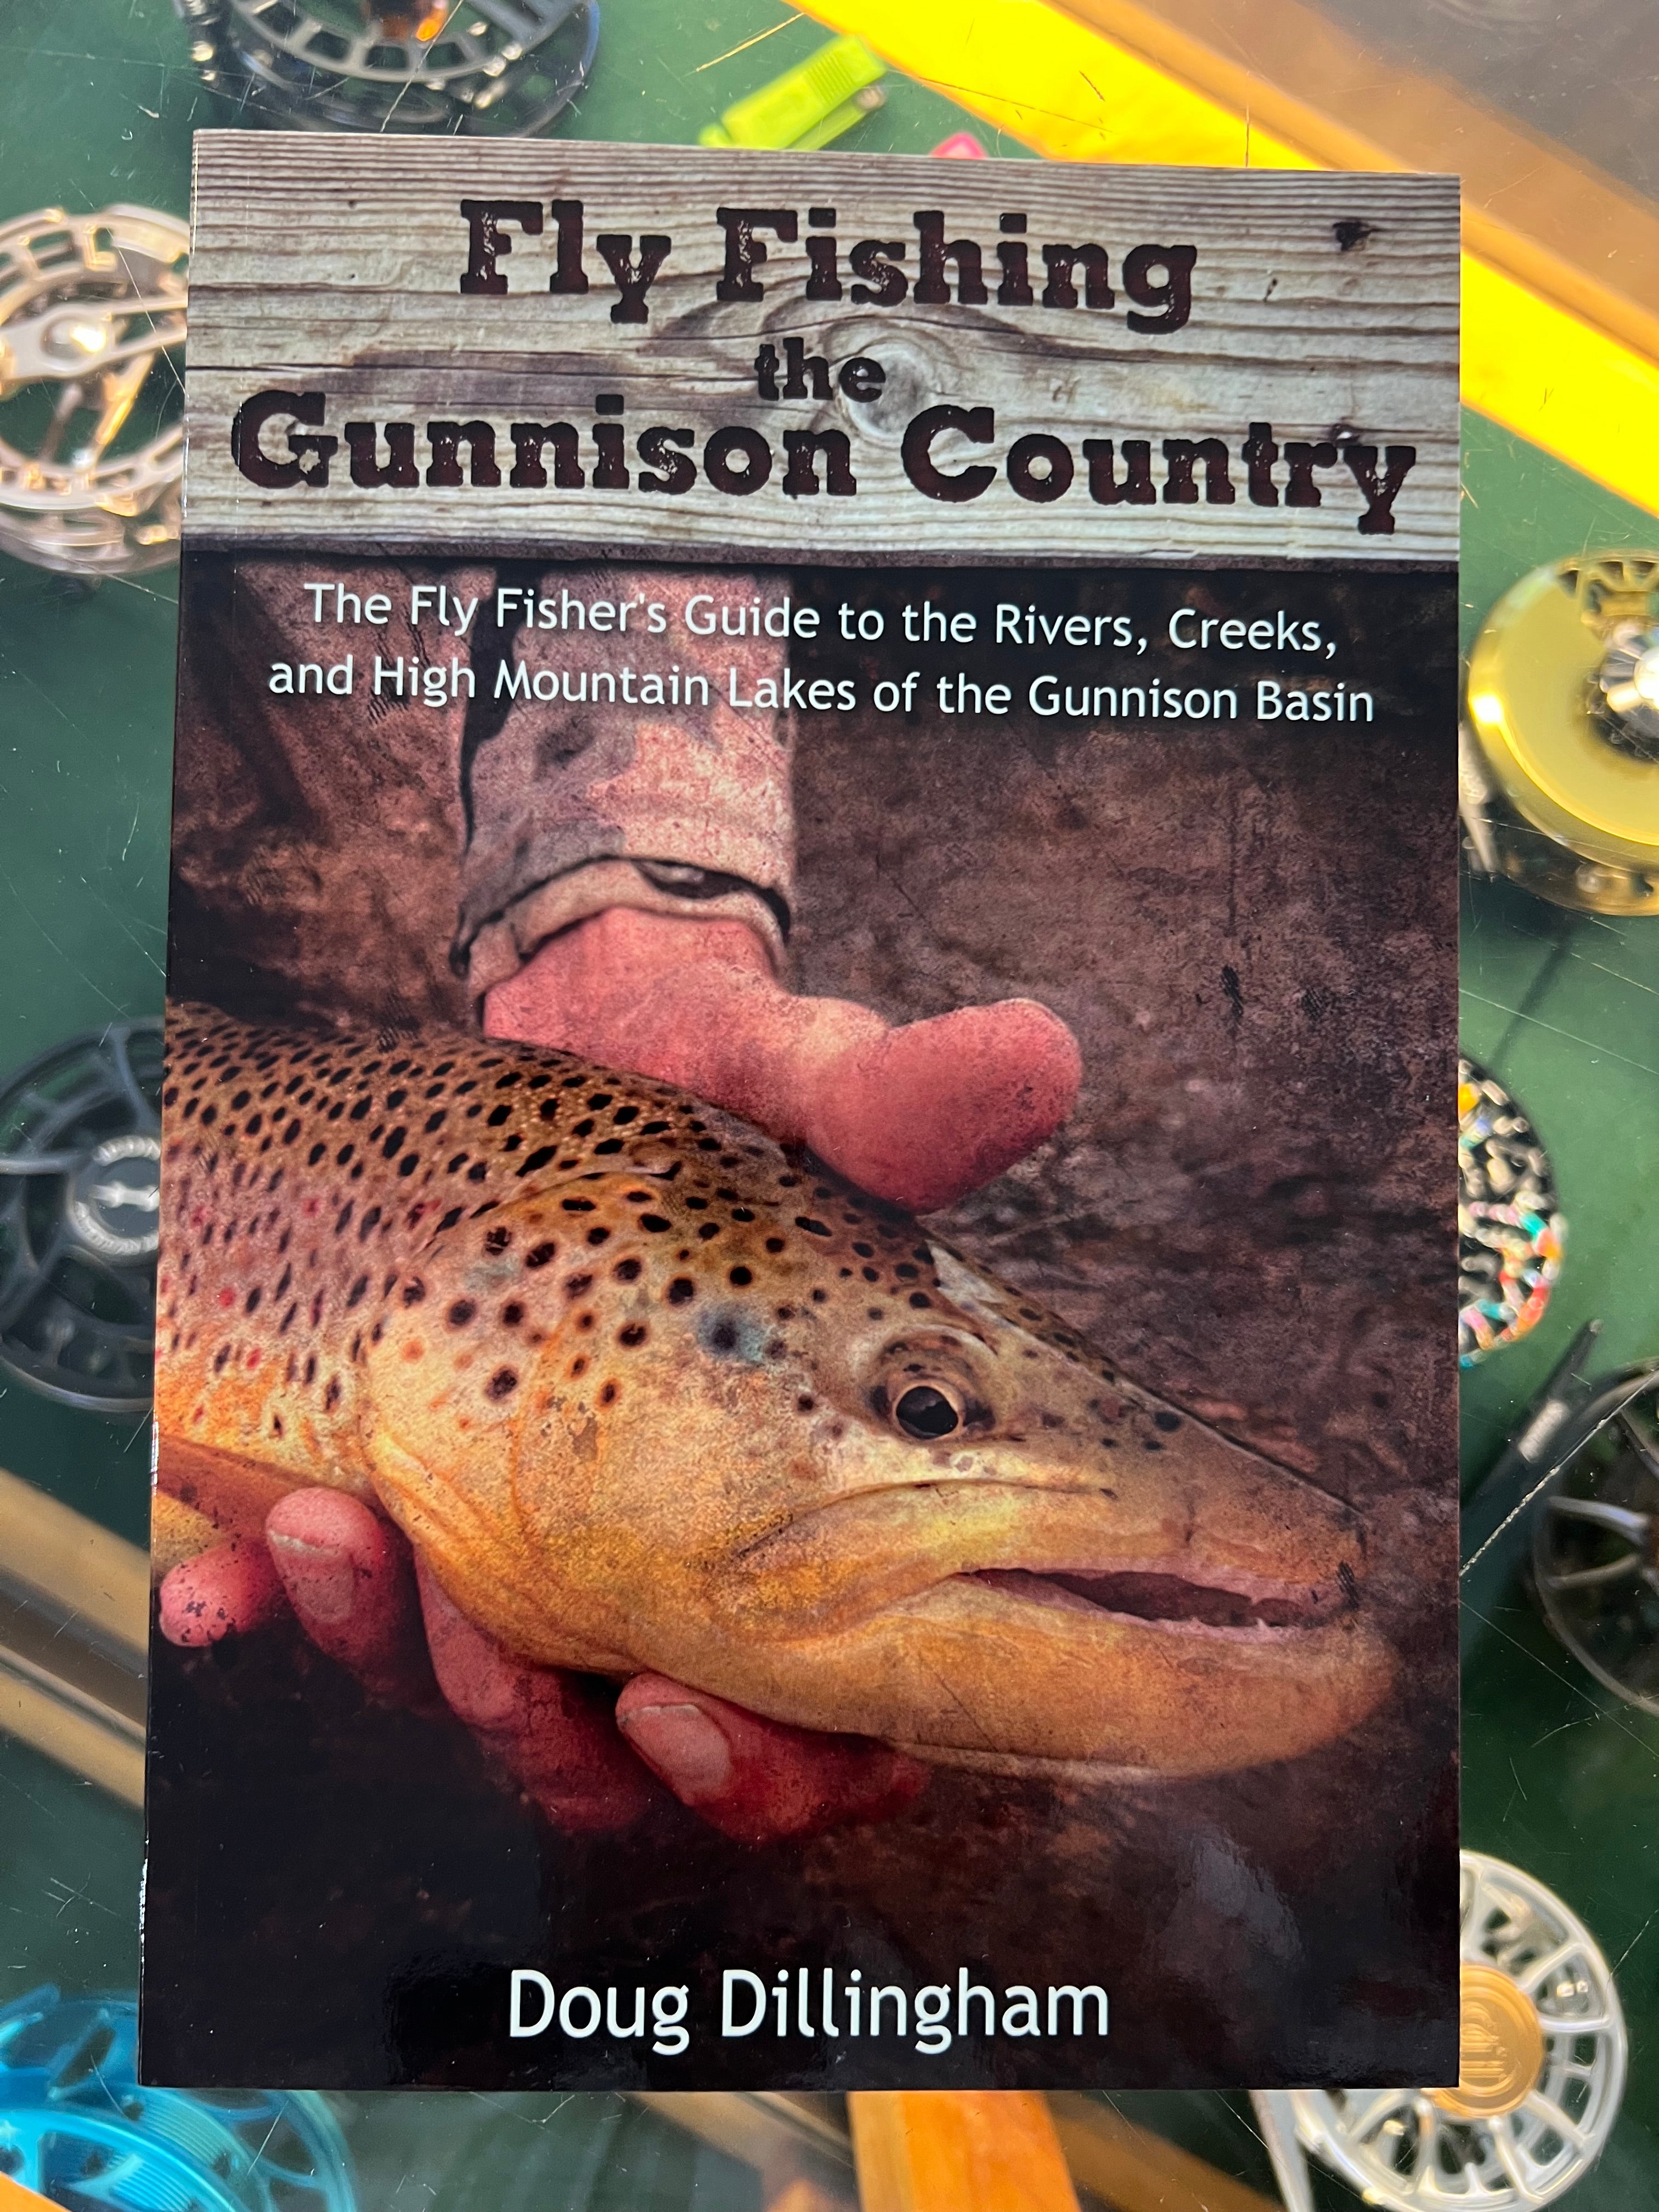  Gunnison River Colorado Fly Fishing Shirt : Clothing, Shoes &  Jewelry